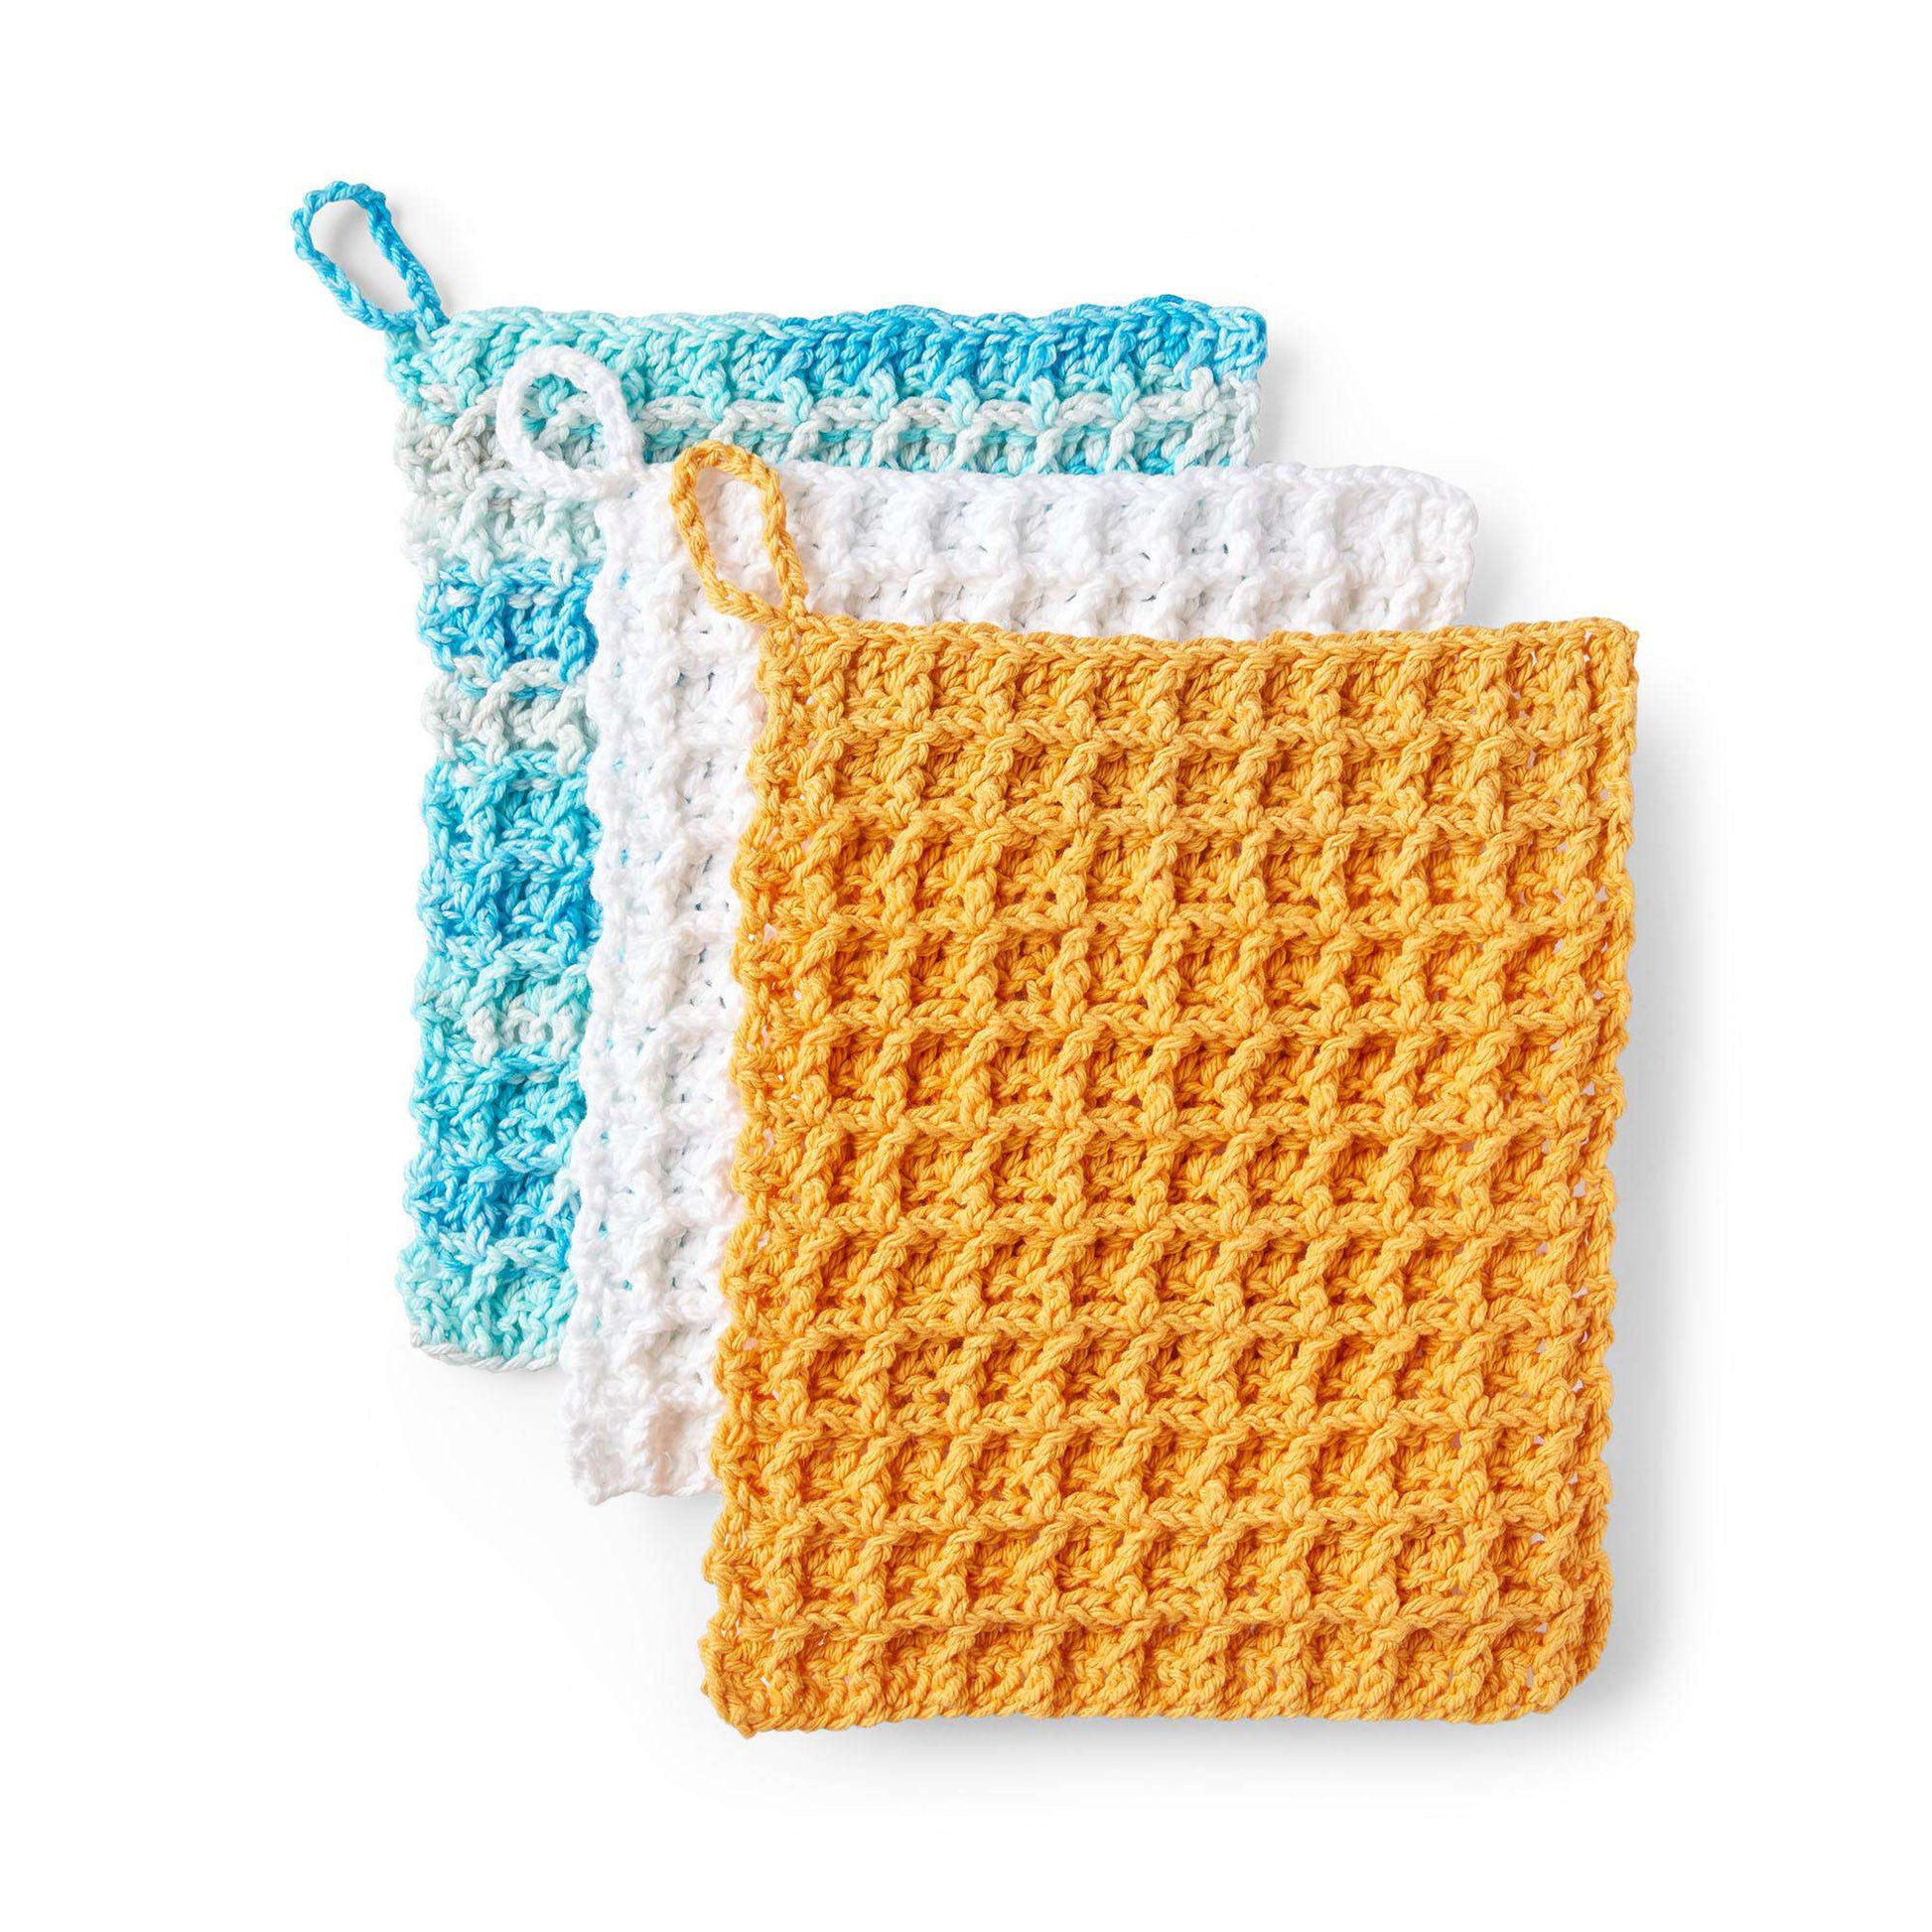 15 Best Peaches and Cream yarn ideas  crochet patterns, crochet, peaches  and cream yarn